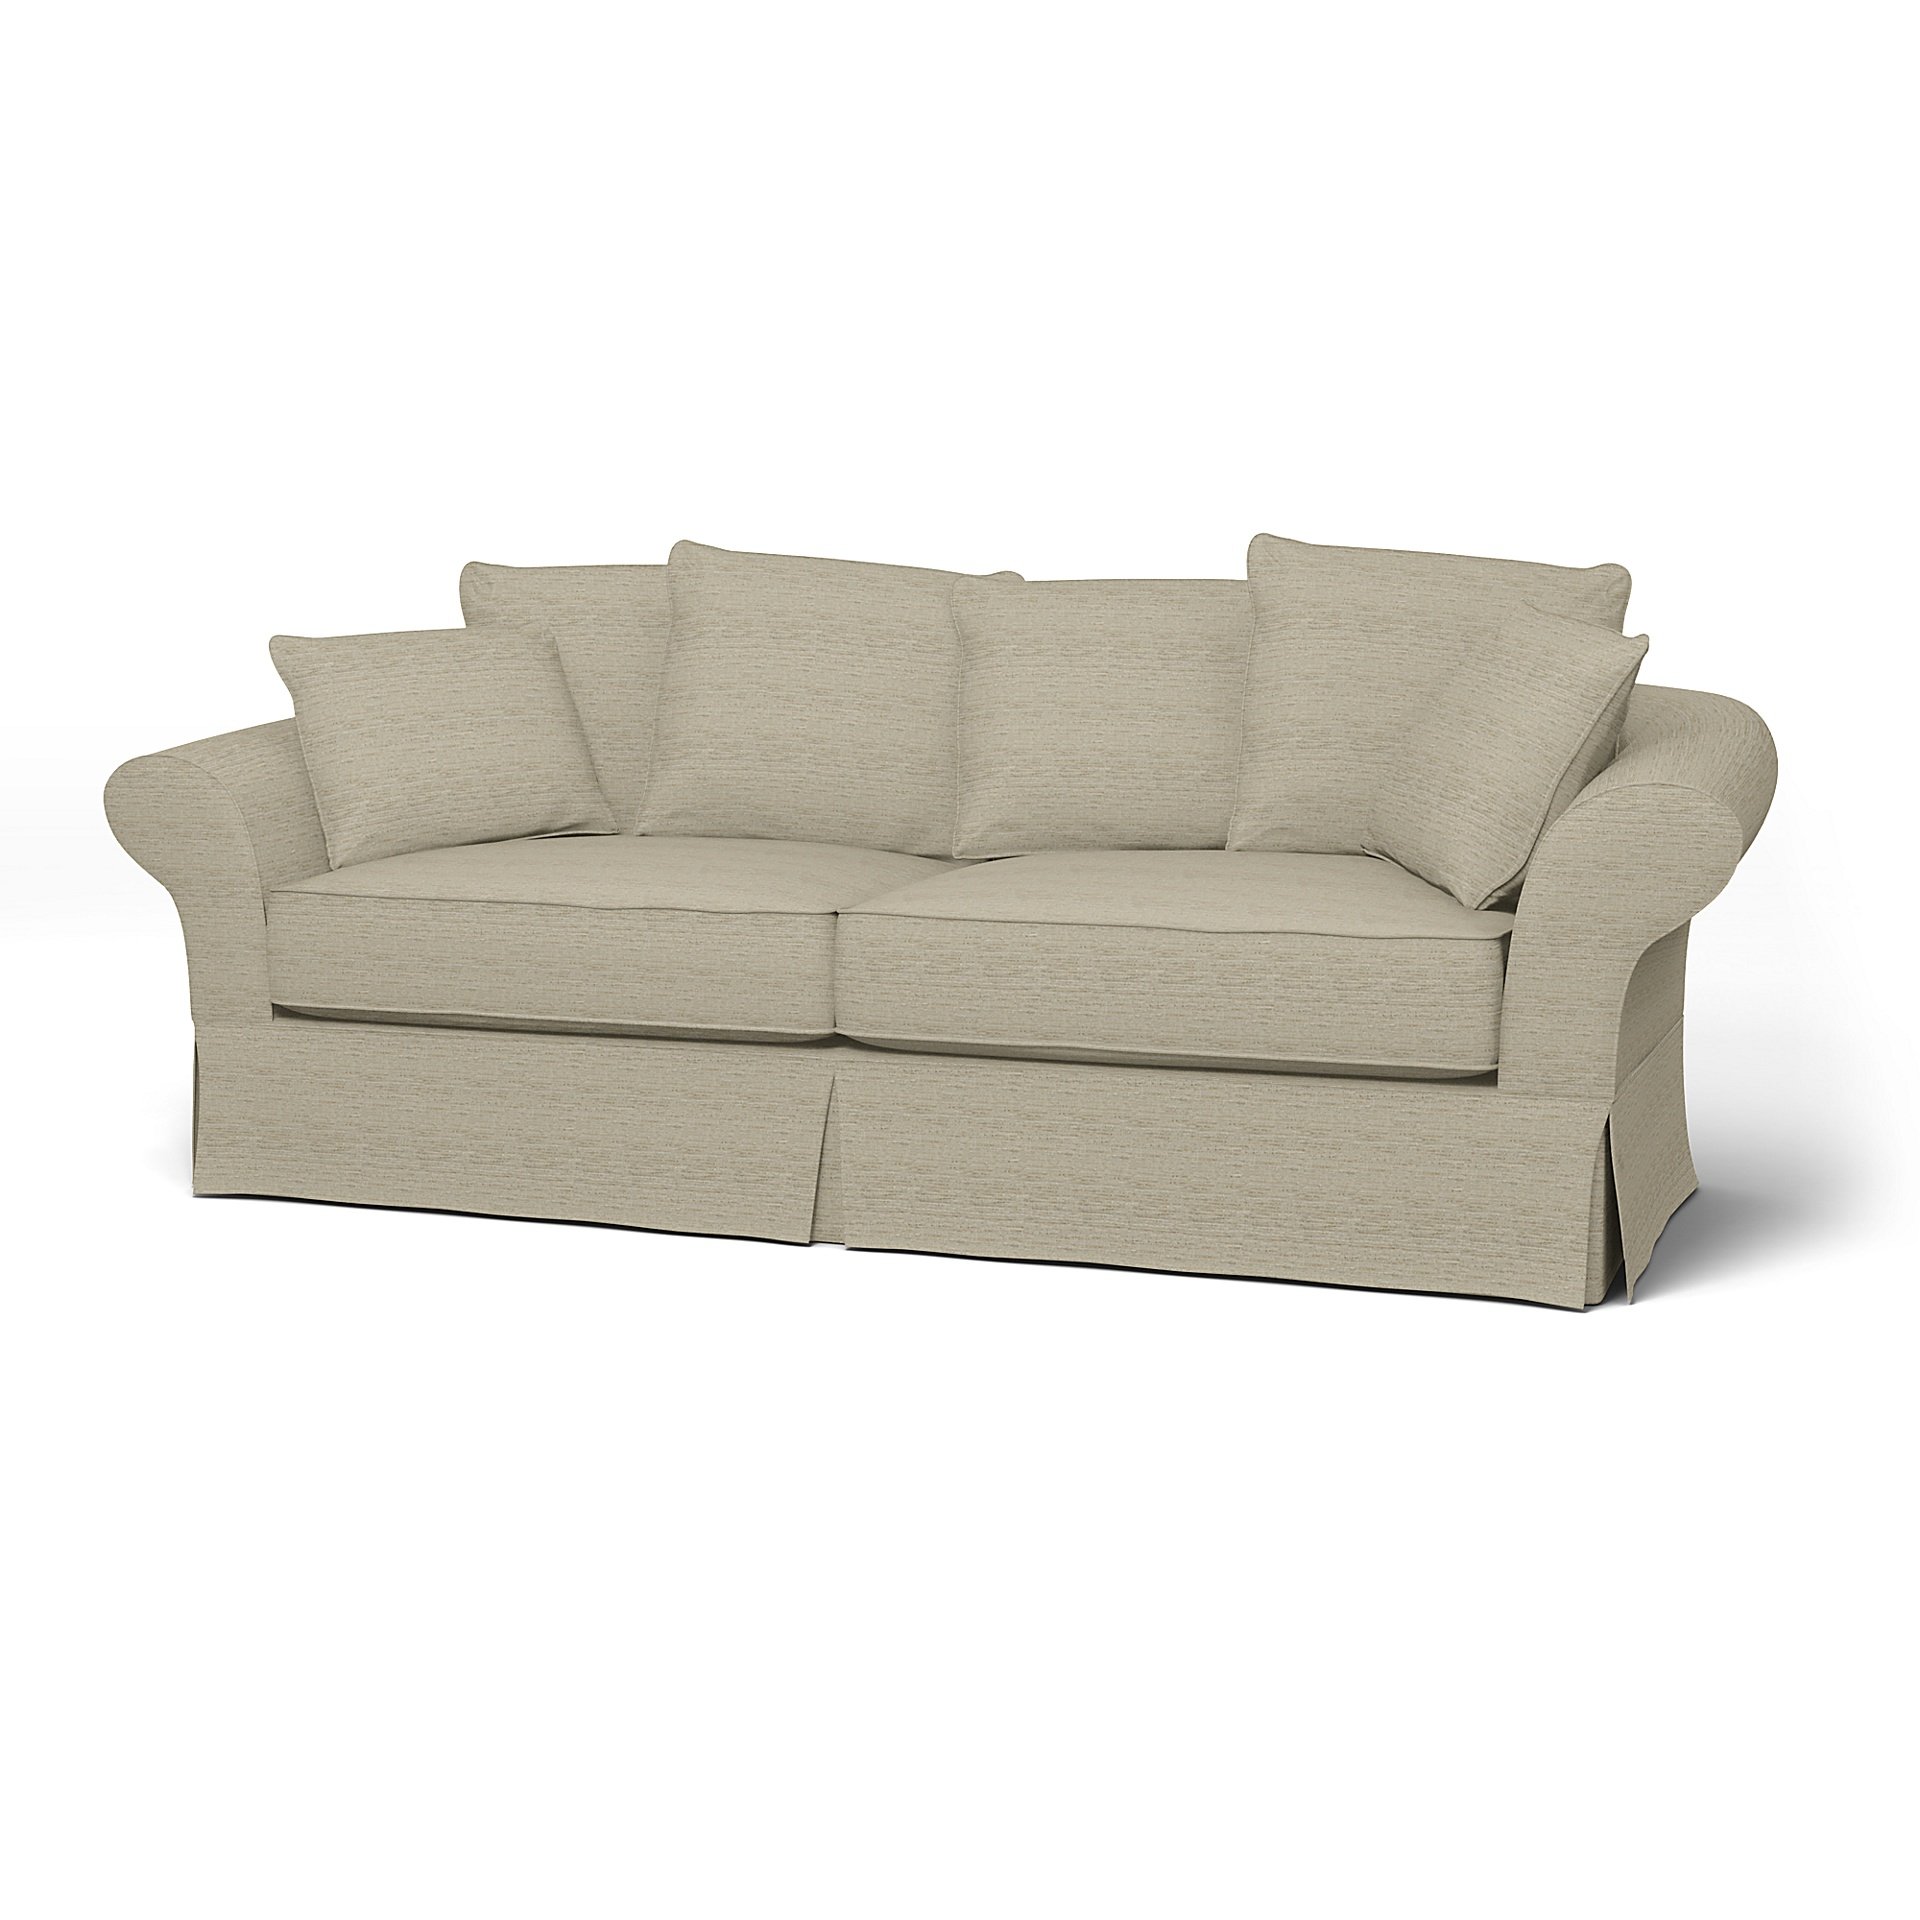 IKEA - Backamo 3 Seater Sofa Cover, Light Sand, Boucle & Texture - Bemz